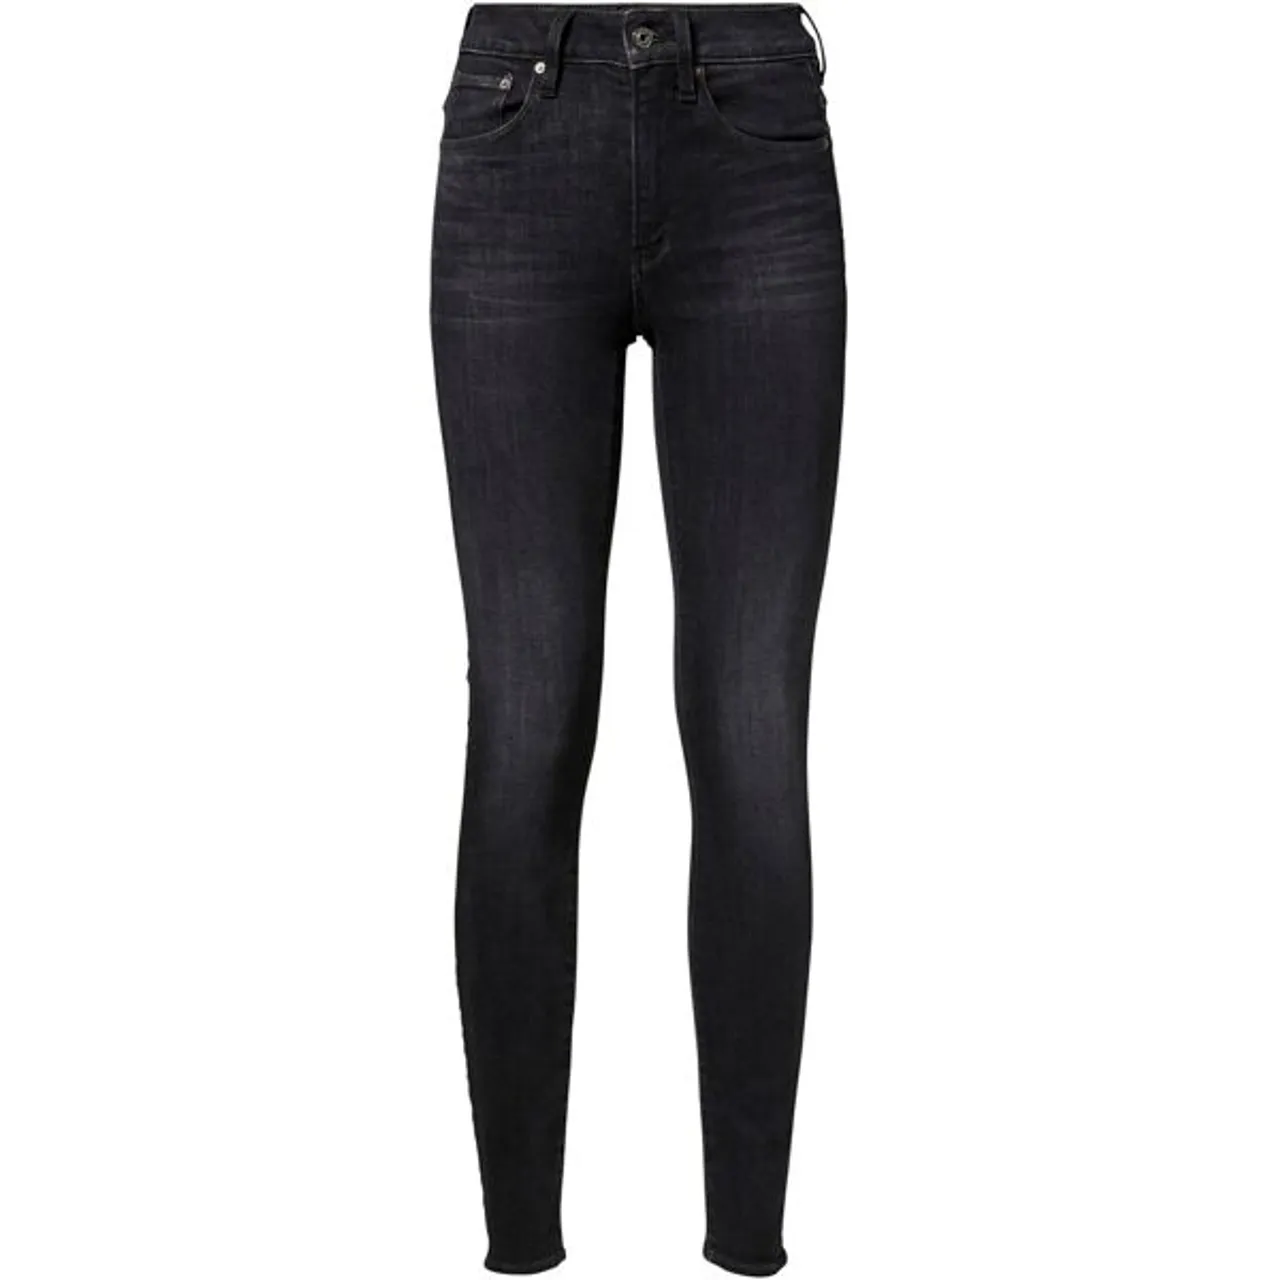 Skinny-fit-Jeans G-STAR RAW "3301 High Skinny" Gr. 26, Länge 32, schwarz (worn in coal (black)) Damen Jeans Röhrenjeans